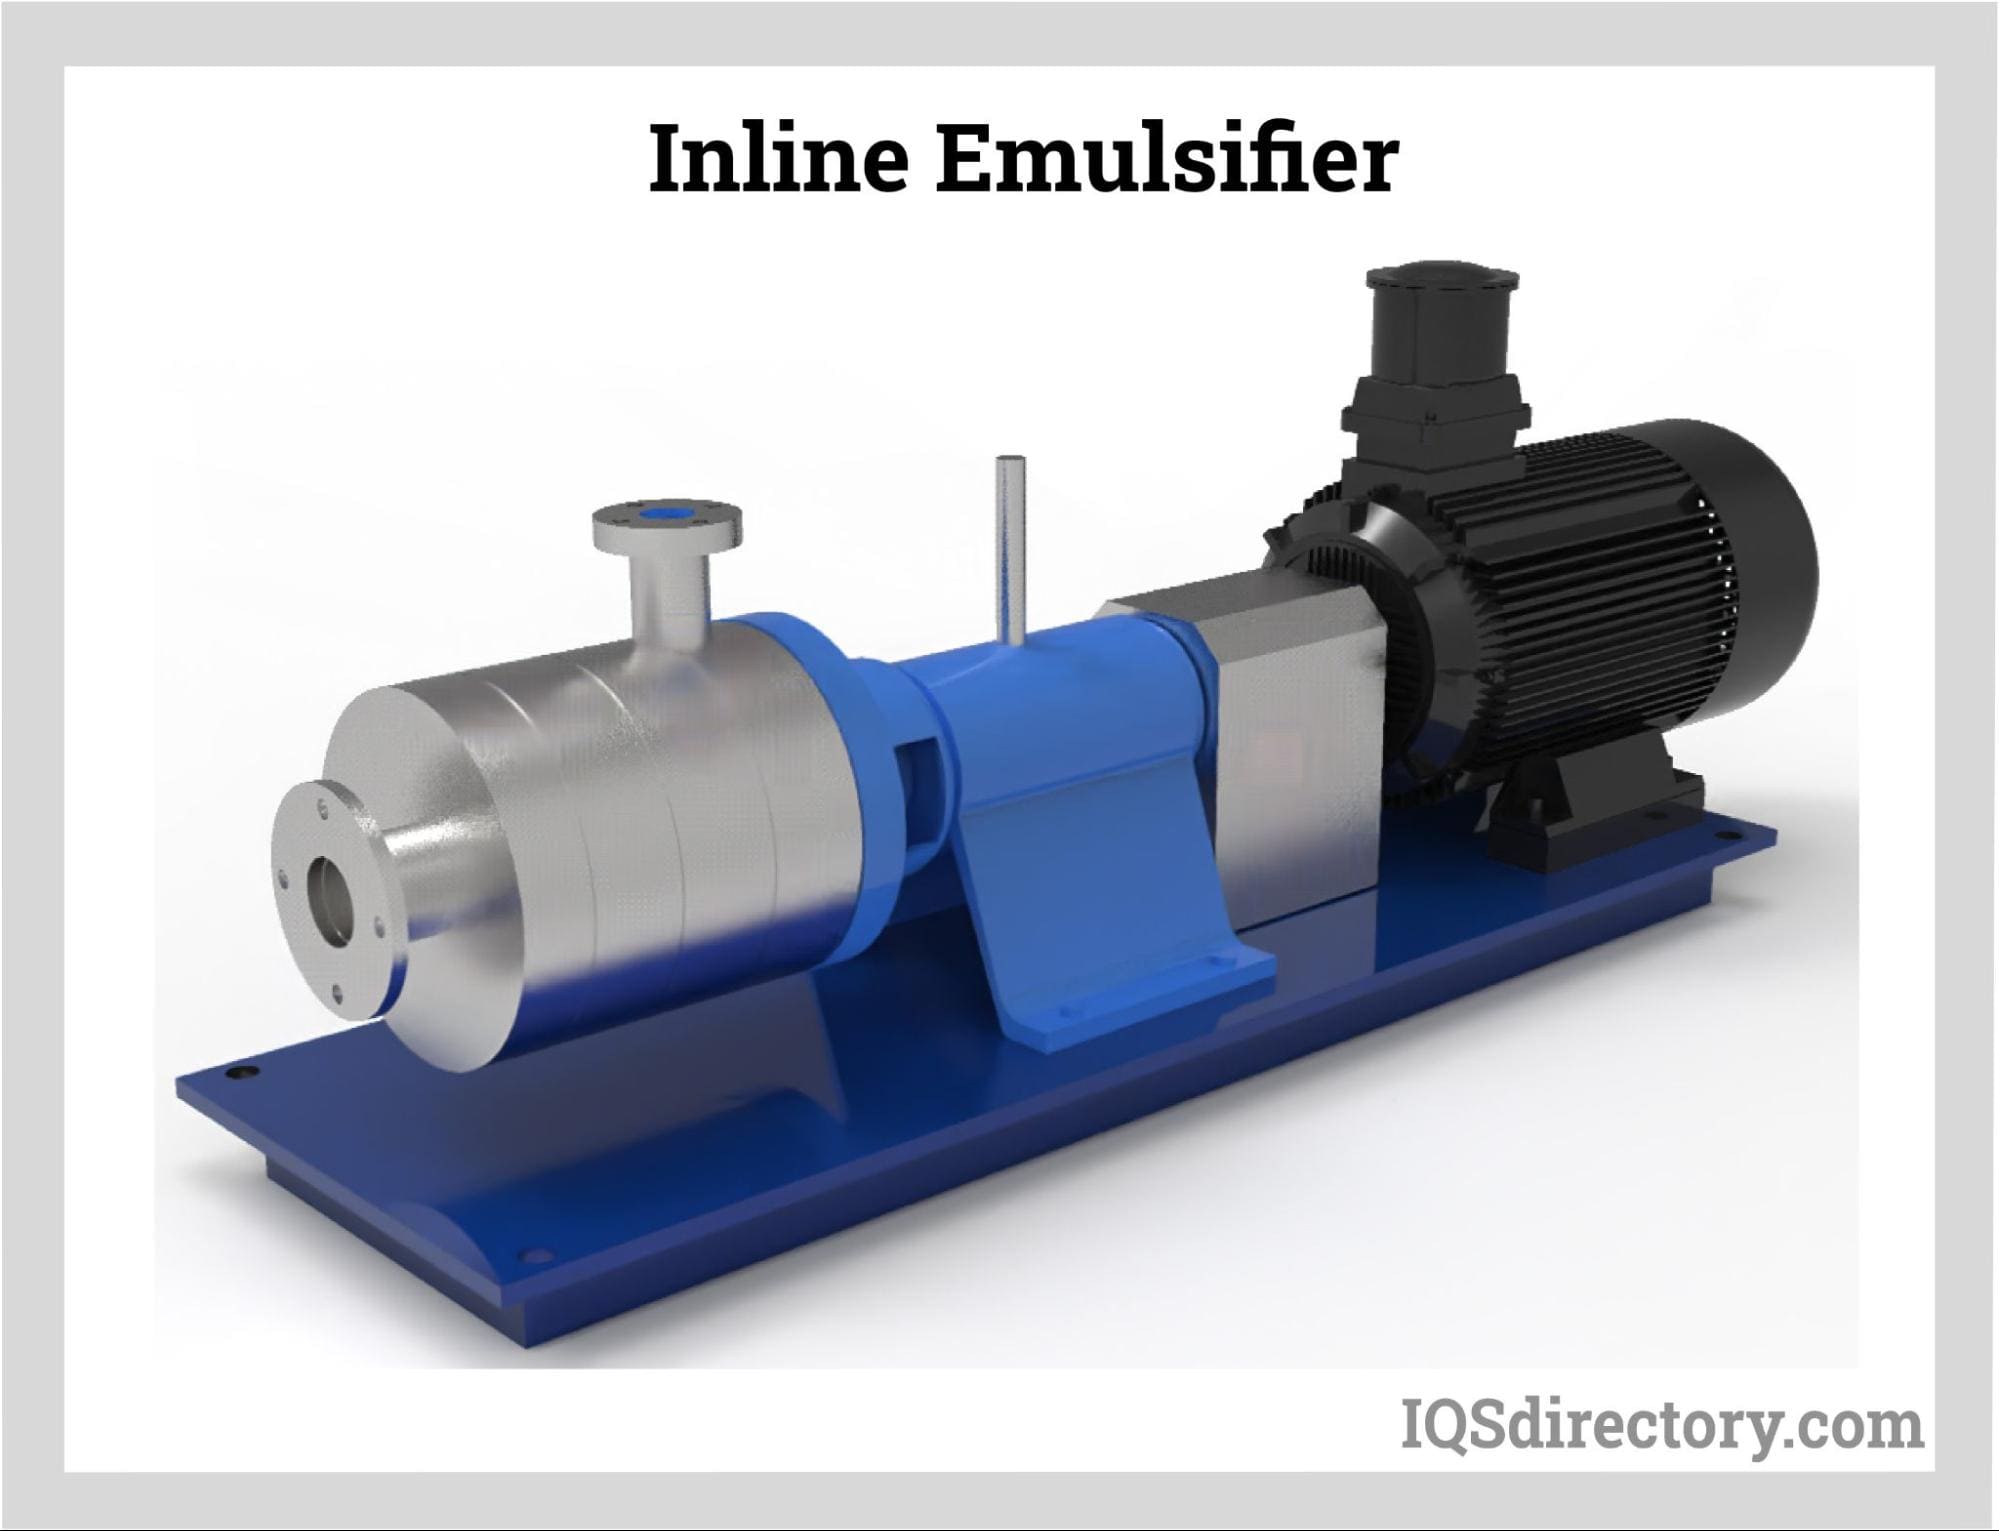 Inline Emulsifier